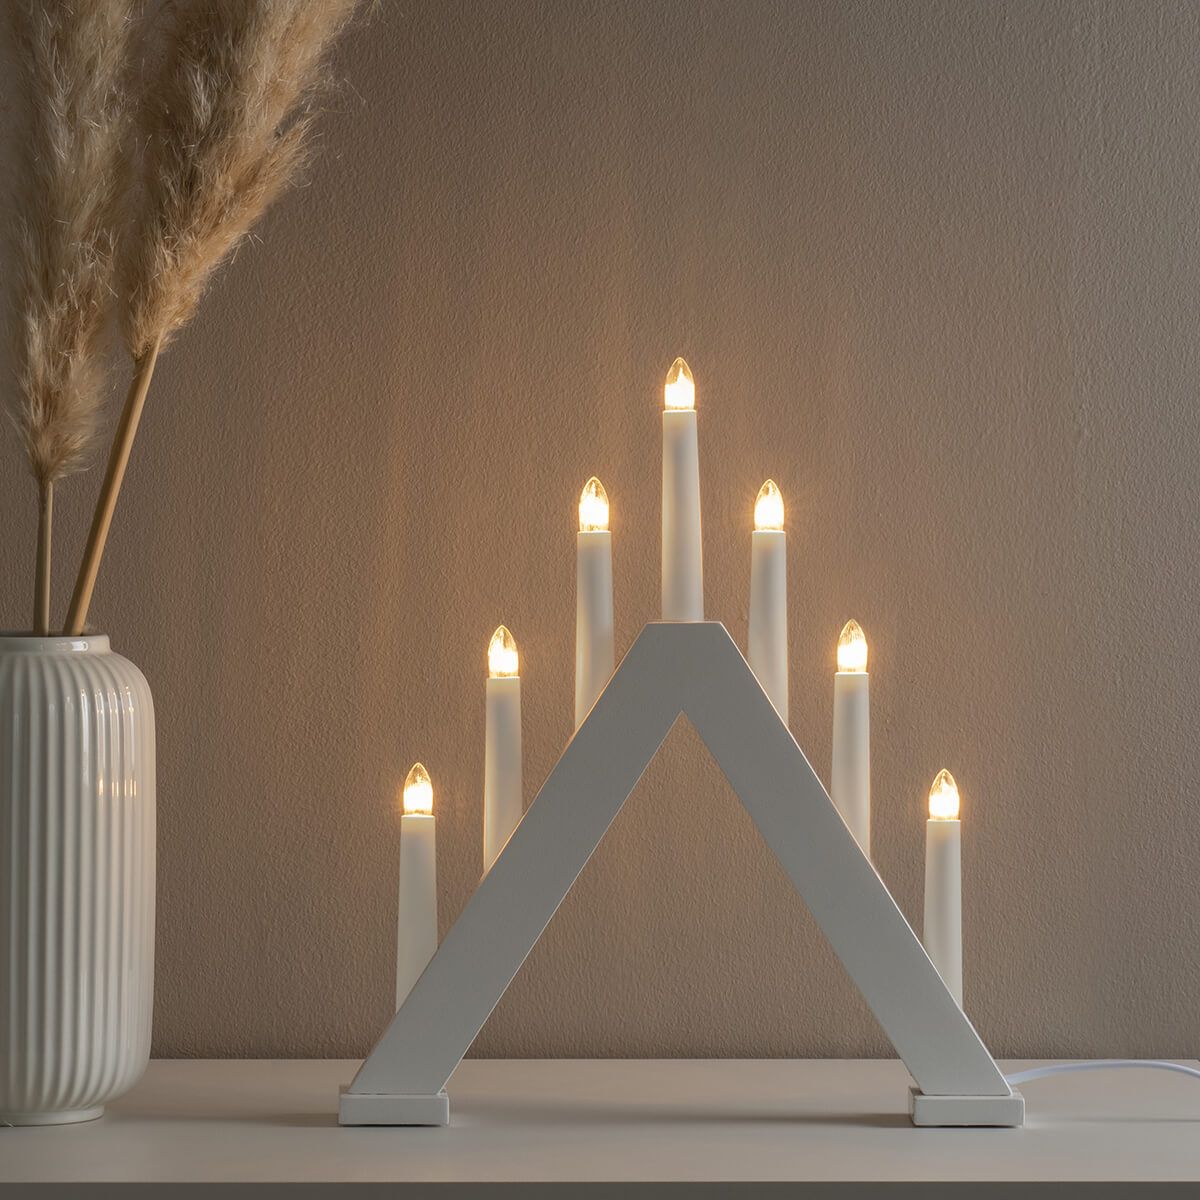 7 Bulb Candlestick - White